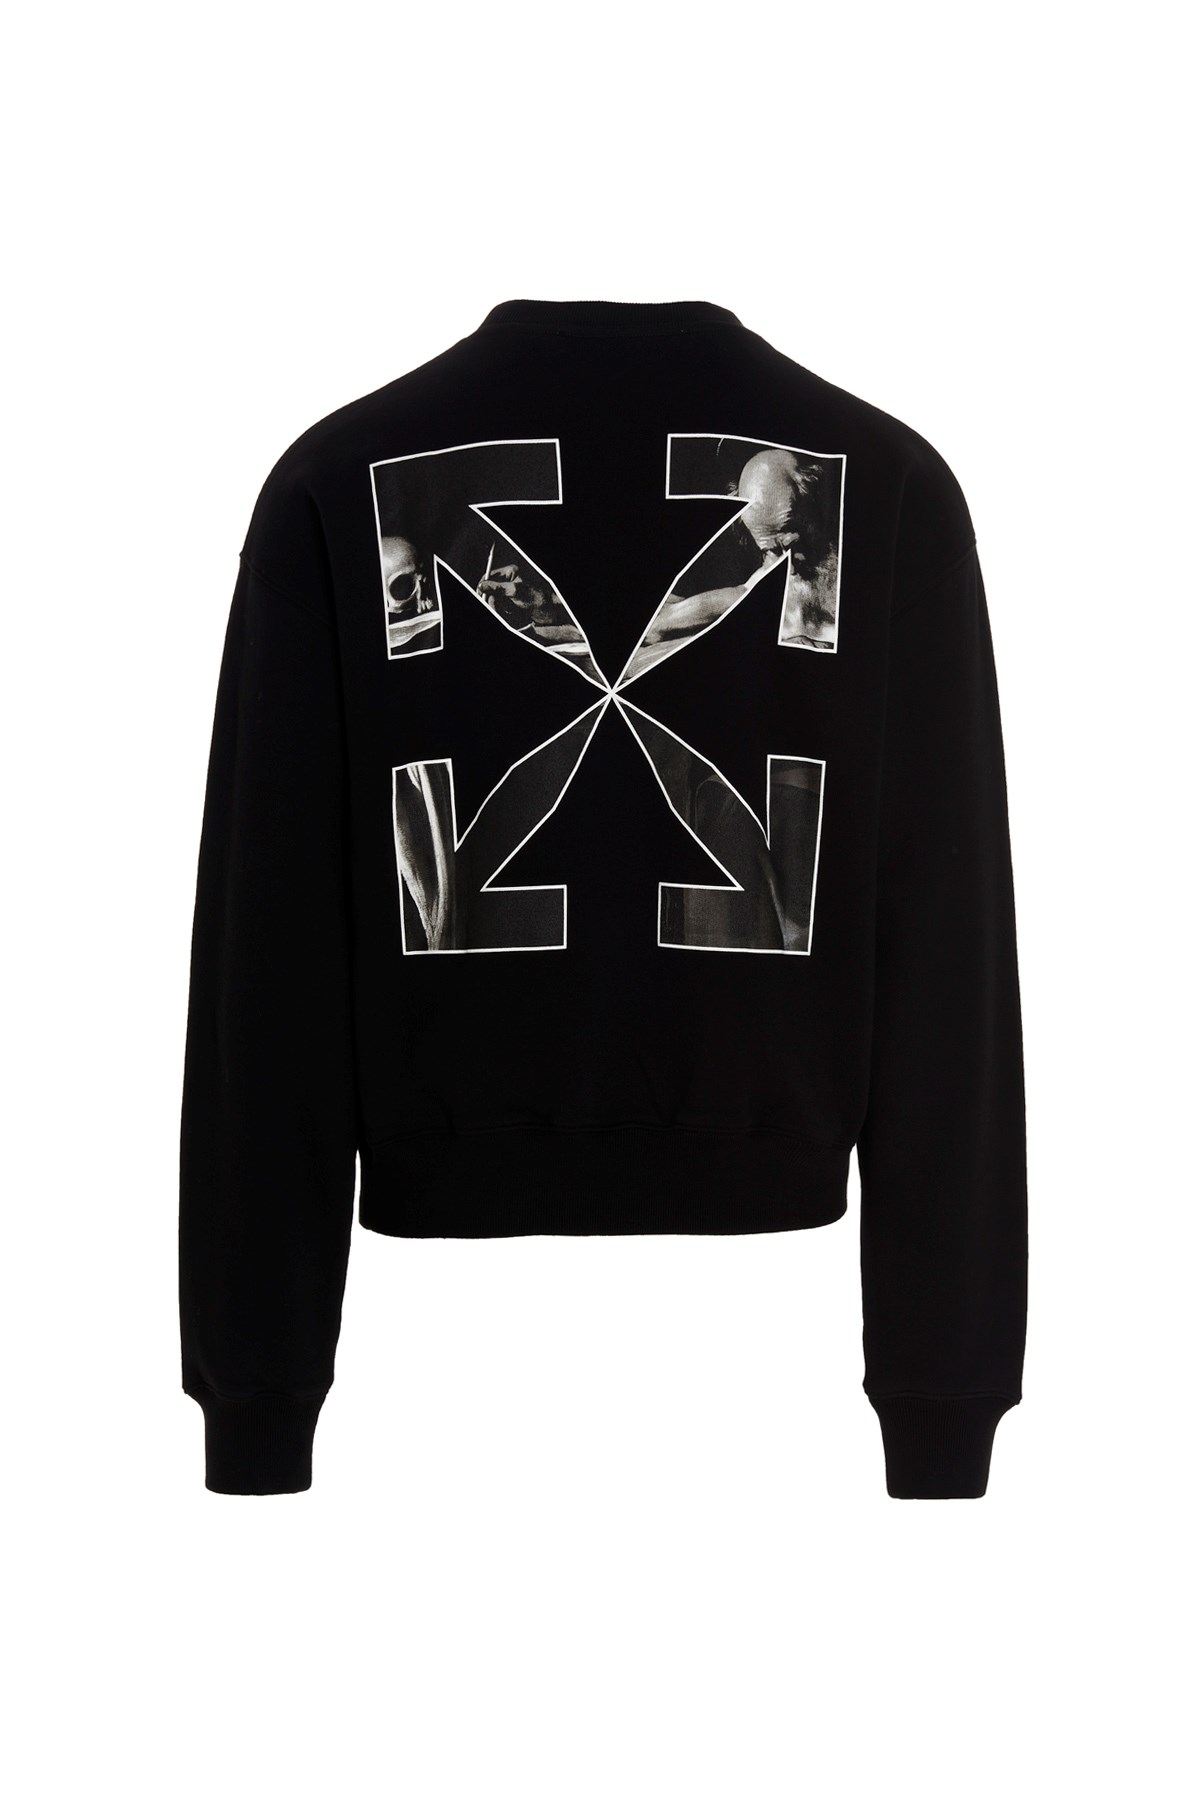 OFF-WHITE 'Caravaggio Arrow’ Sweatshirt